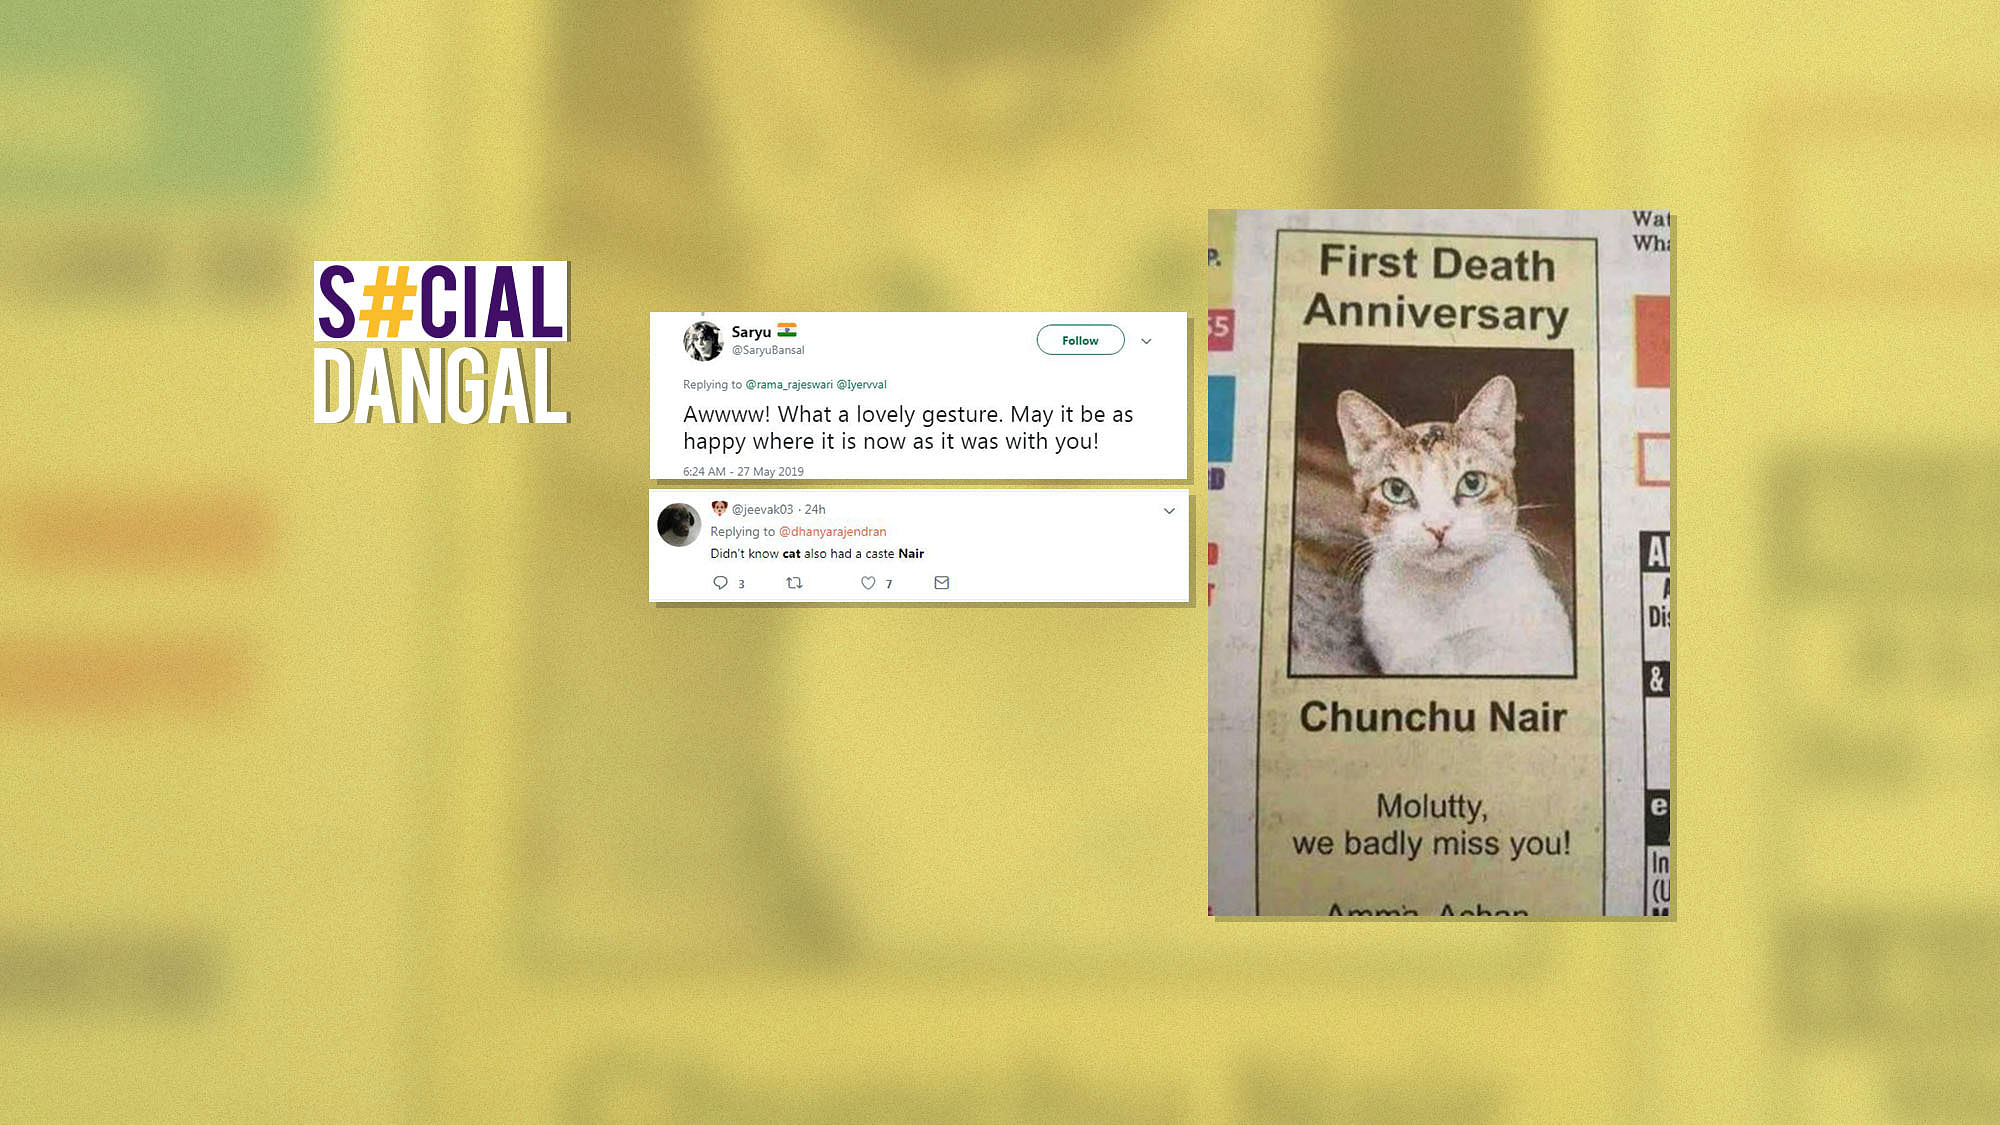 Chunchu Nair’s first death anniversary advertisement drew mixed reactions.&nbsp;